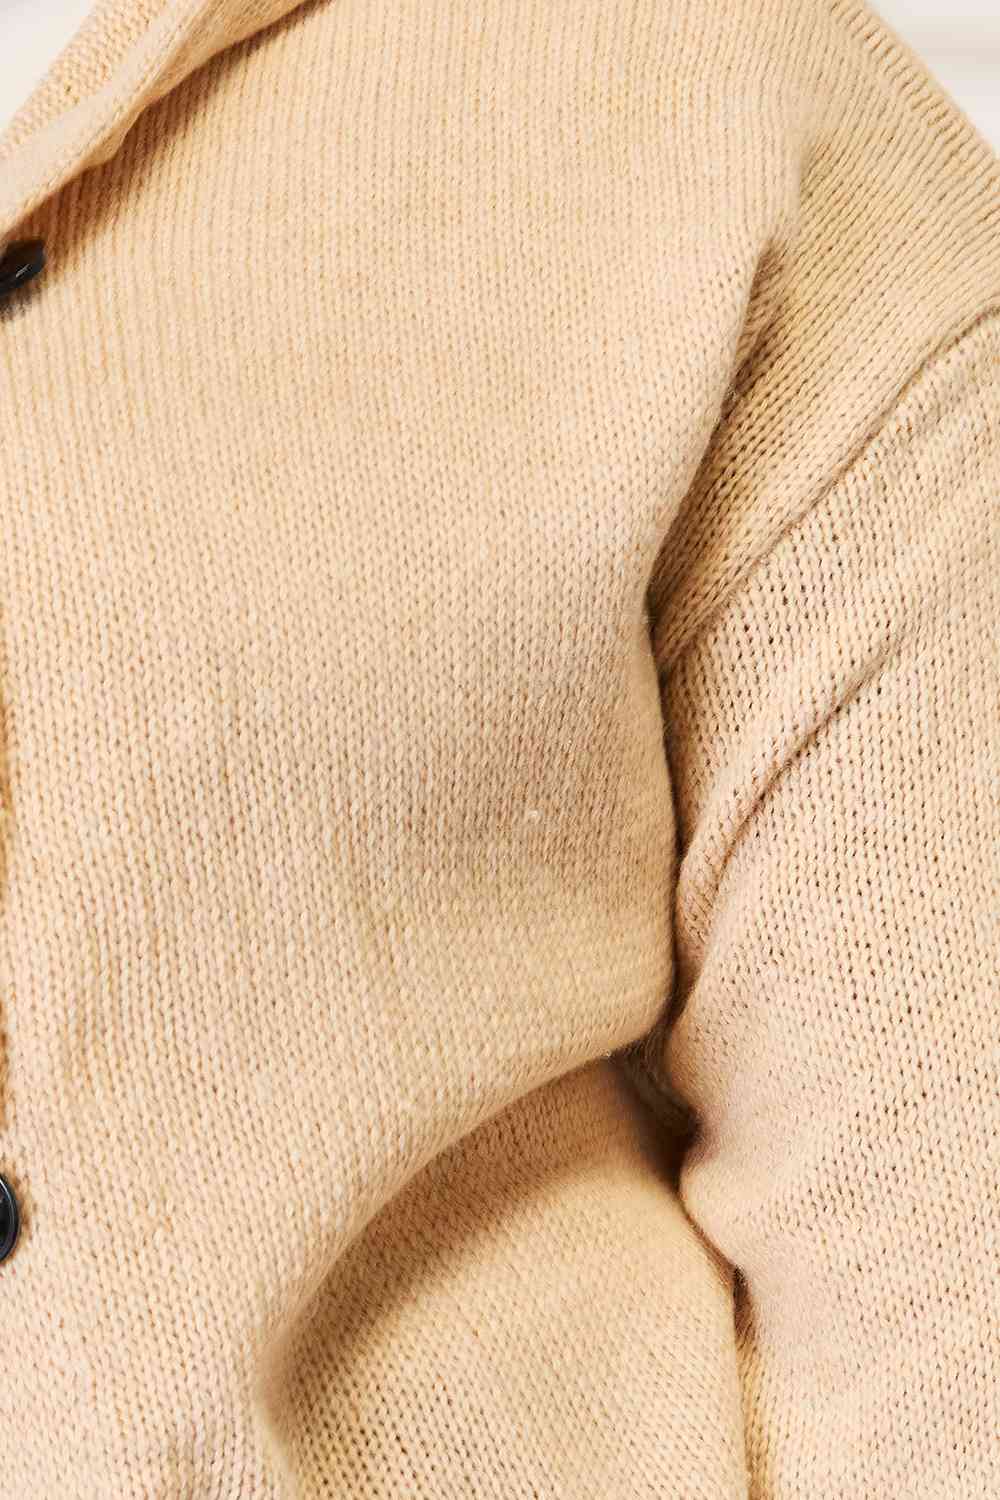 TEEK - Woven Right Button-Down Hooded Sweater SWEATER TEEK Trend   